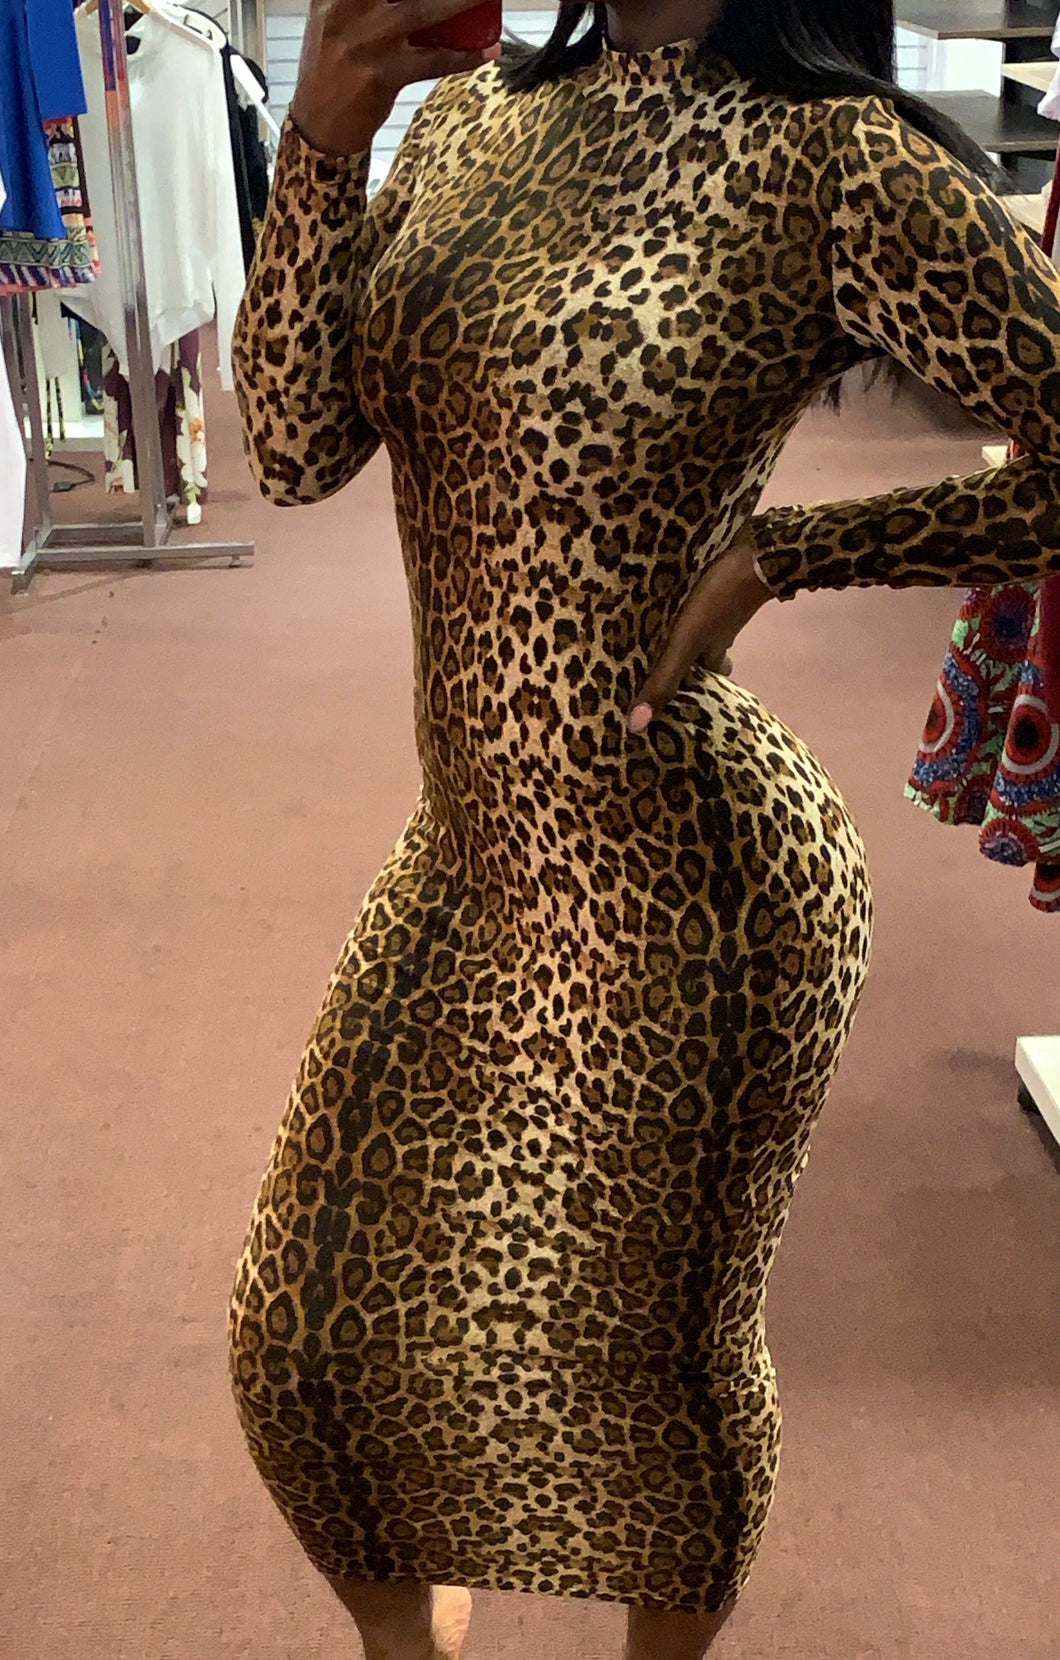 Leopard dreams dress